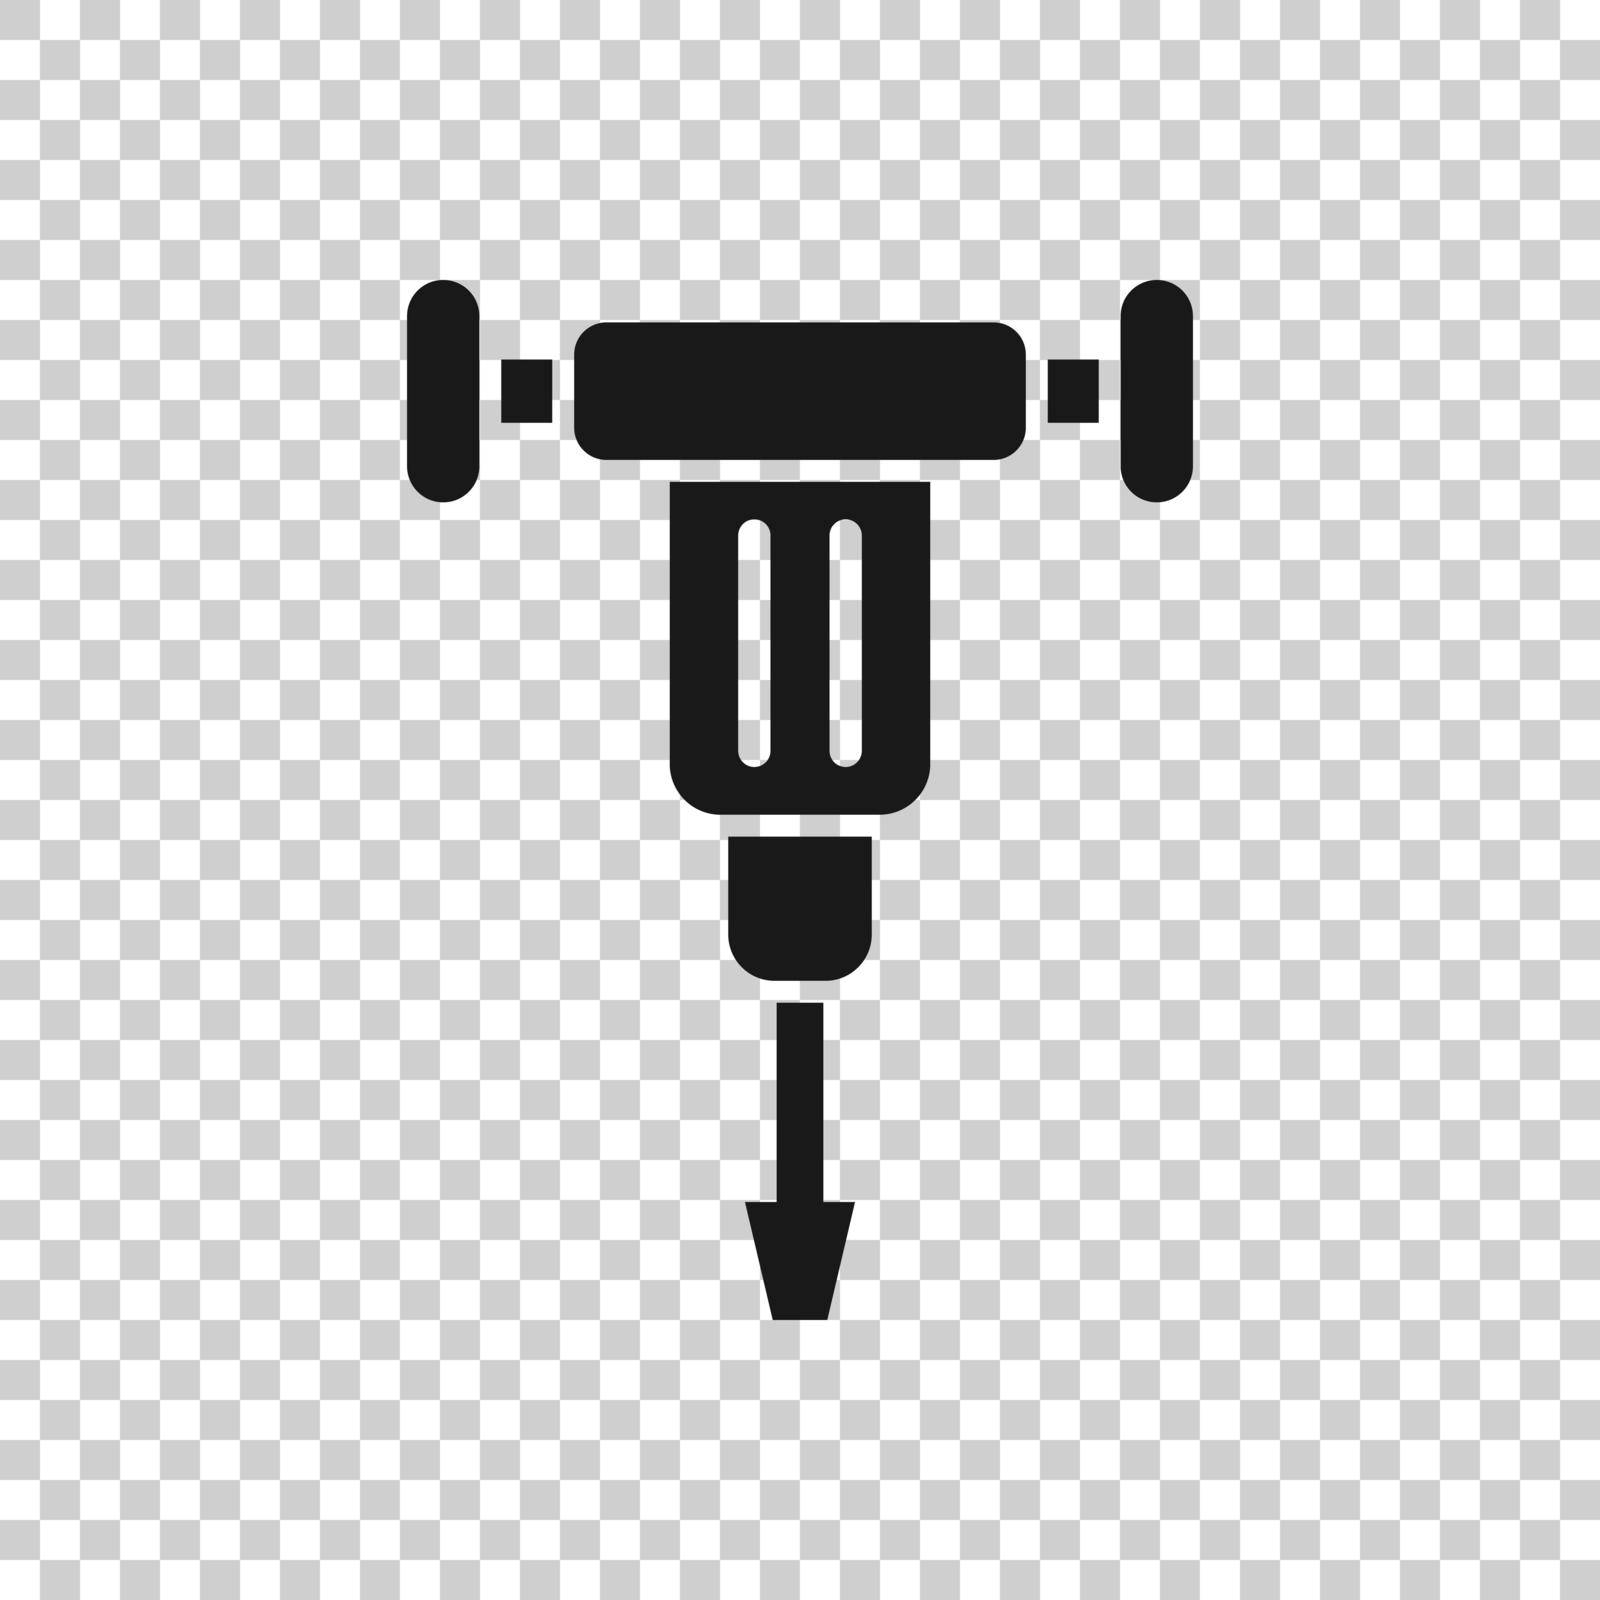 Jackhammer icon in flat style. Demolish vector illustration on white isolated background. Destroy business concept.